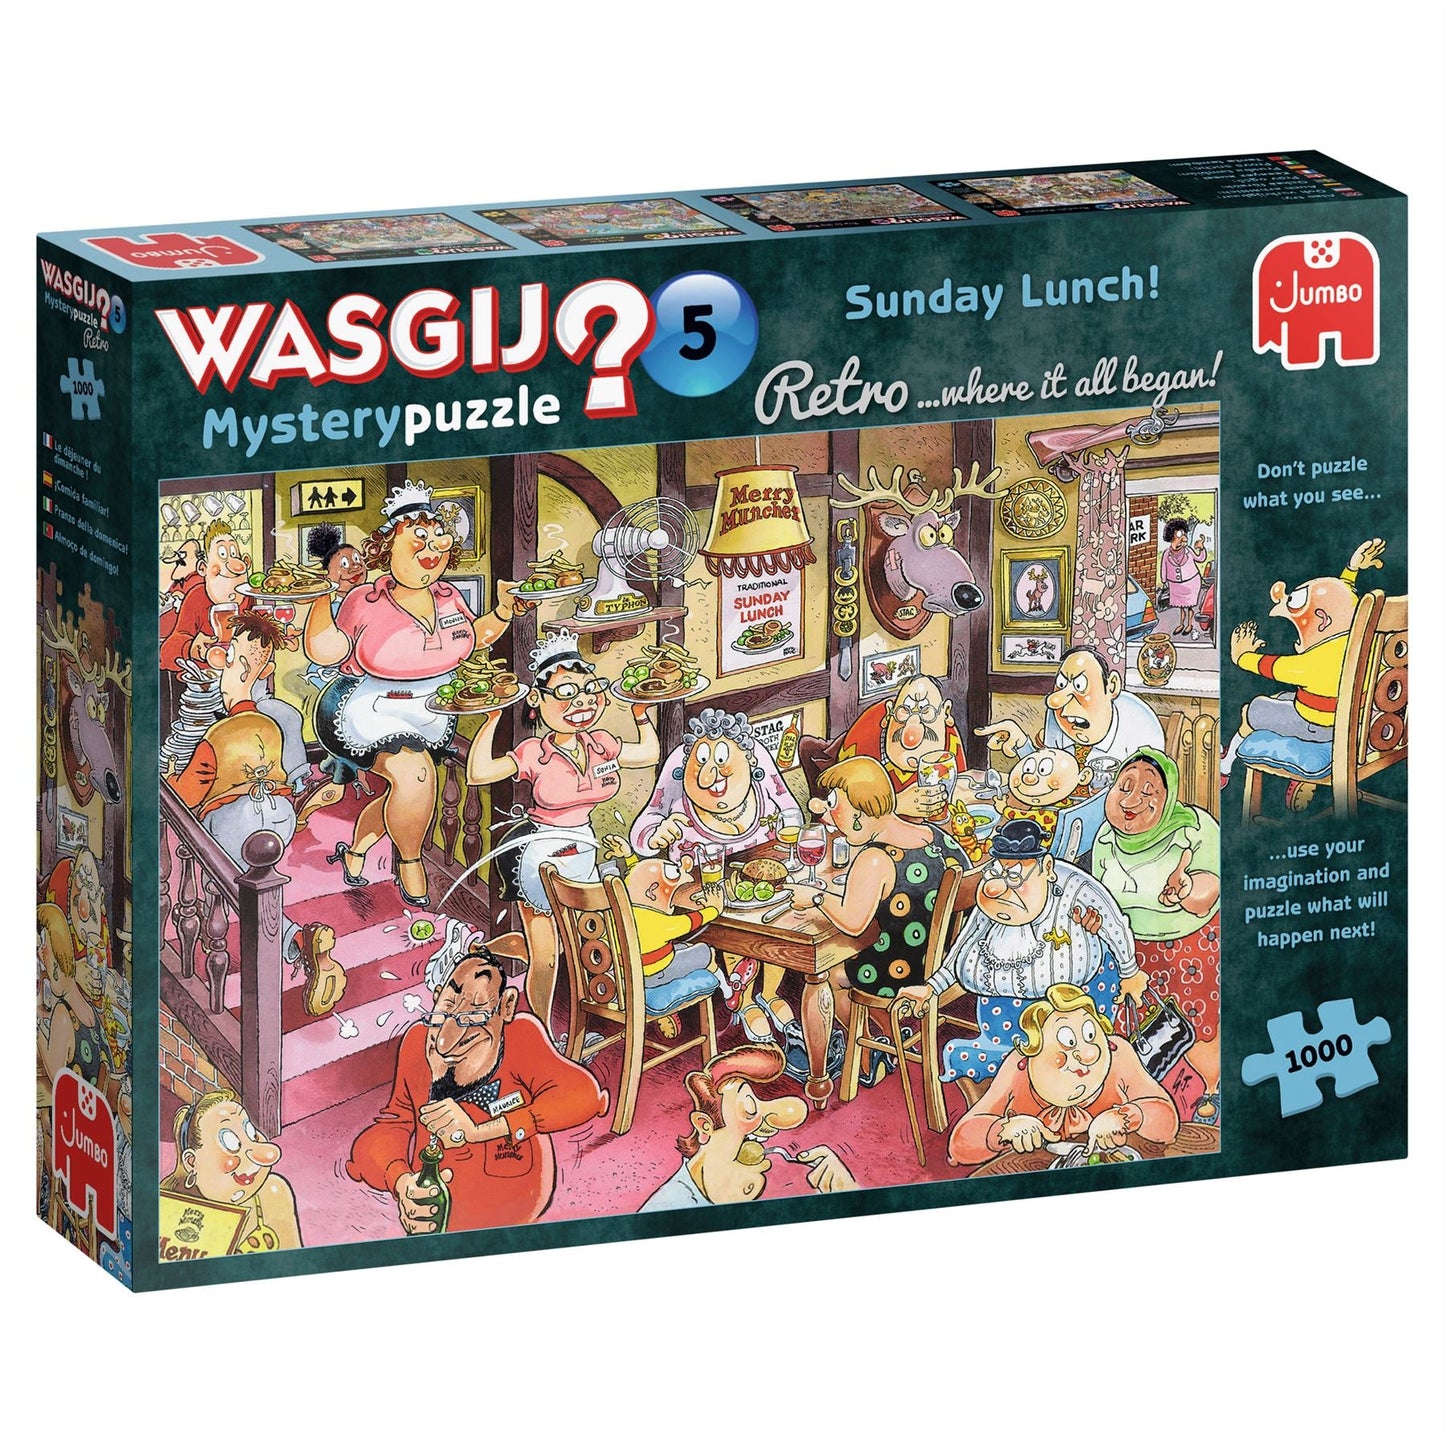 Wasgij Retro 5 Sunday Lunch! 1000 Piece Jigsaw Puzzle 2